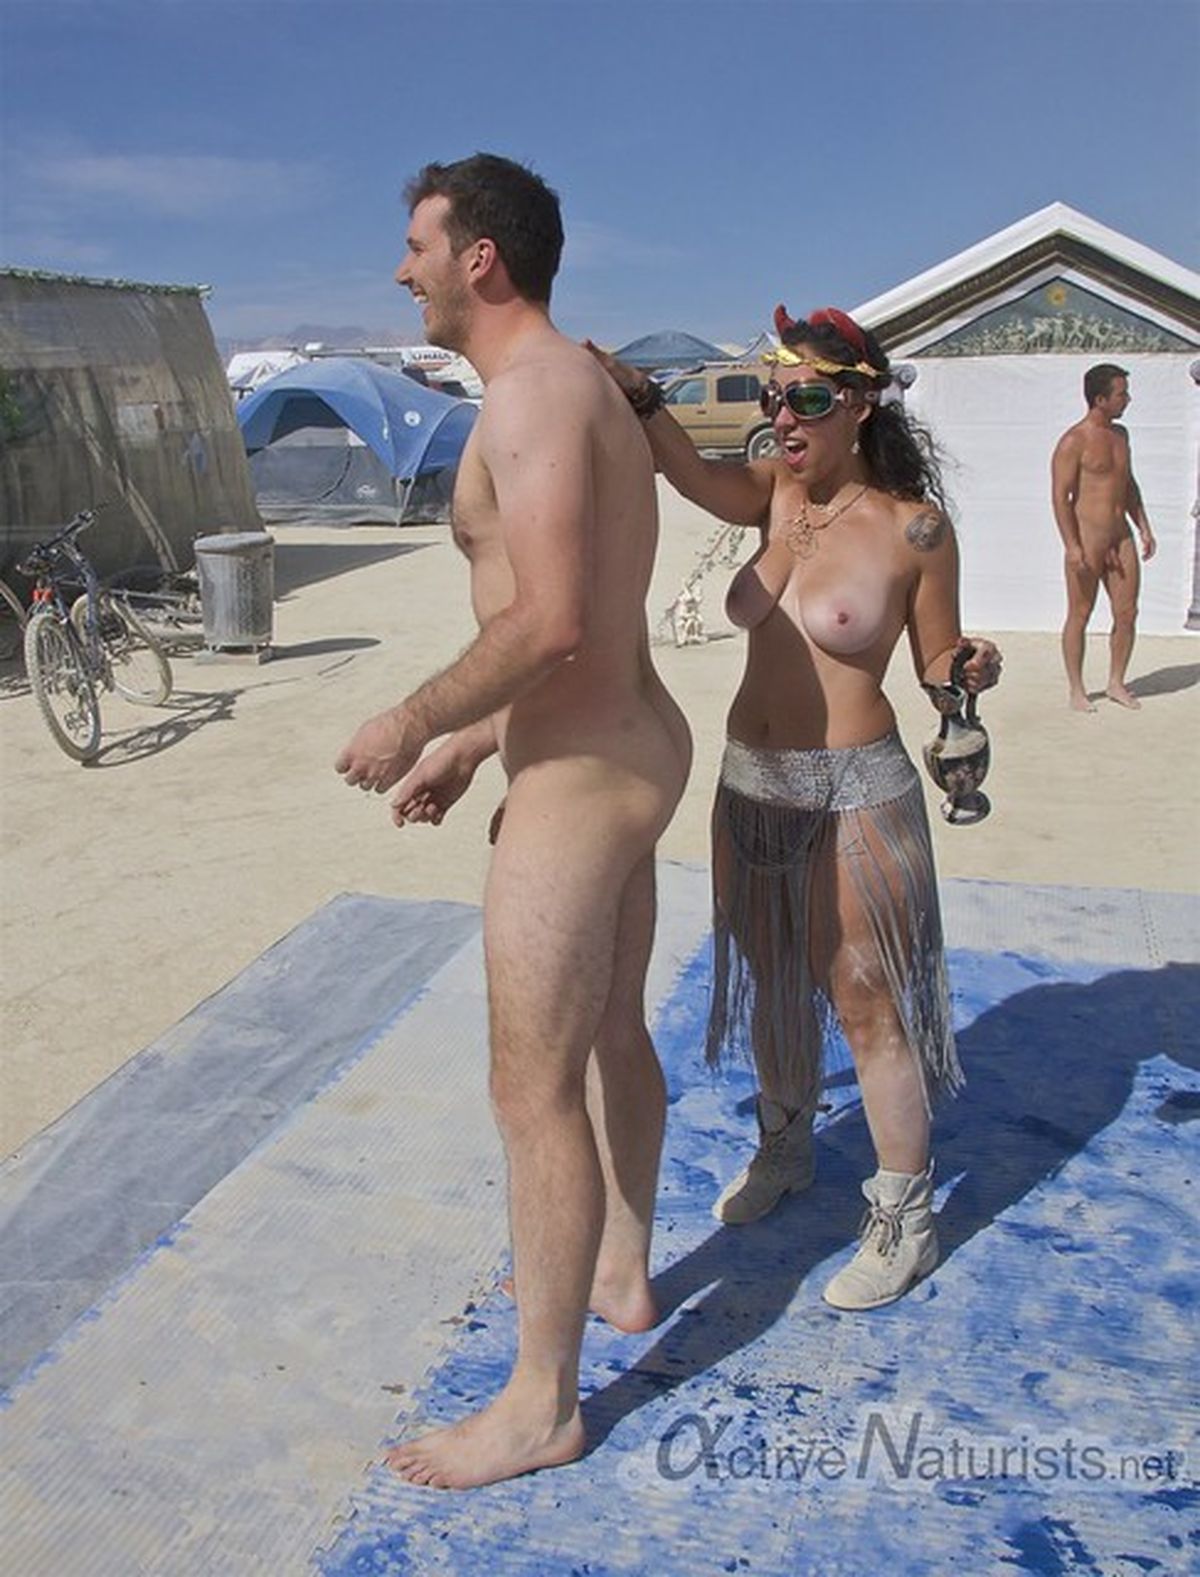 https://www.nudismlife.com/galleries/public_nudity/burning_man/active_naturists/active_naturists_048.jpg